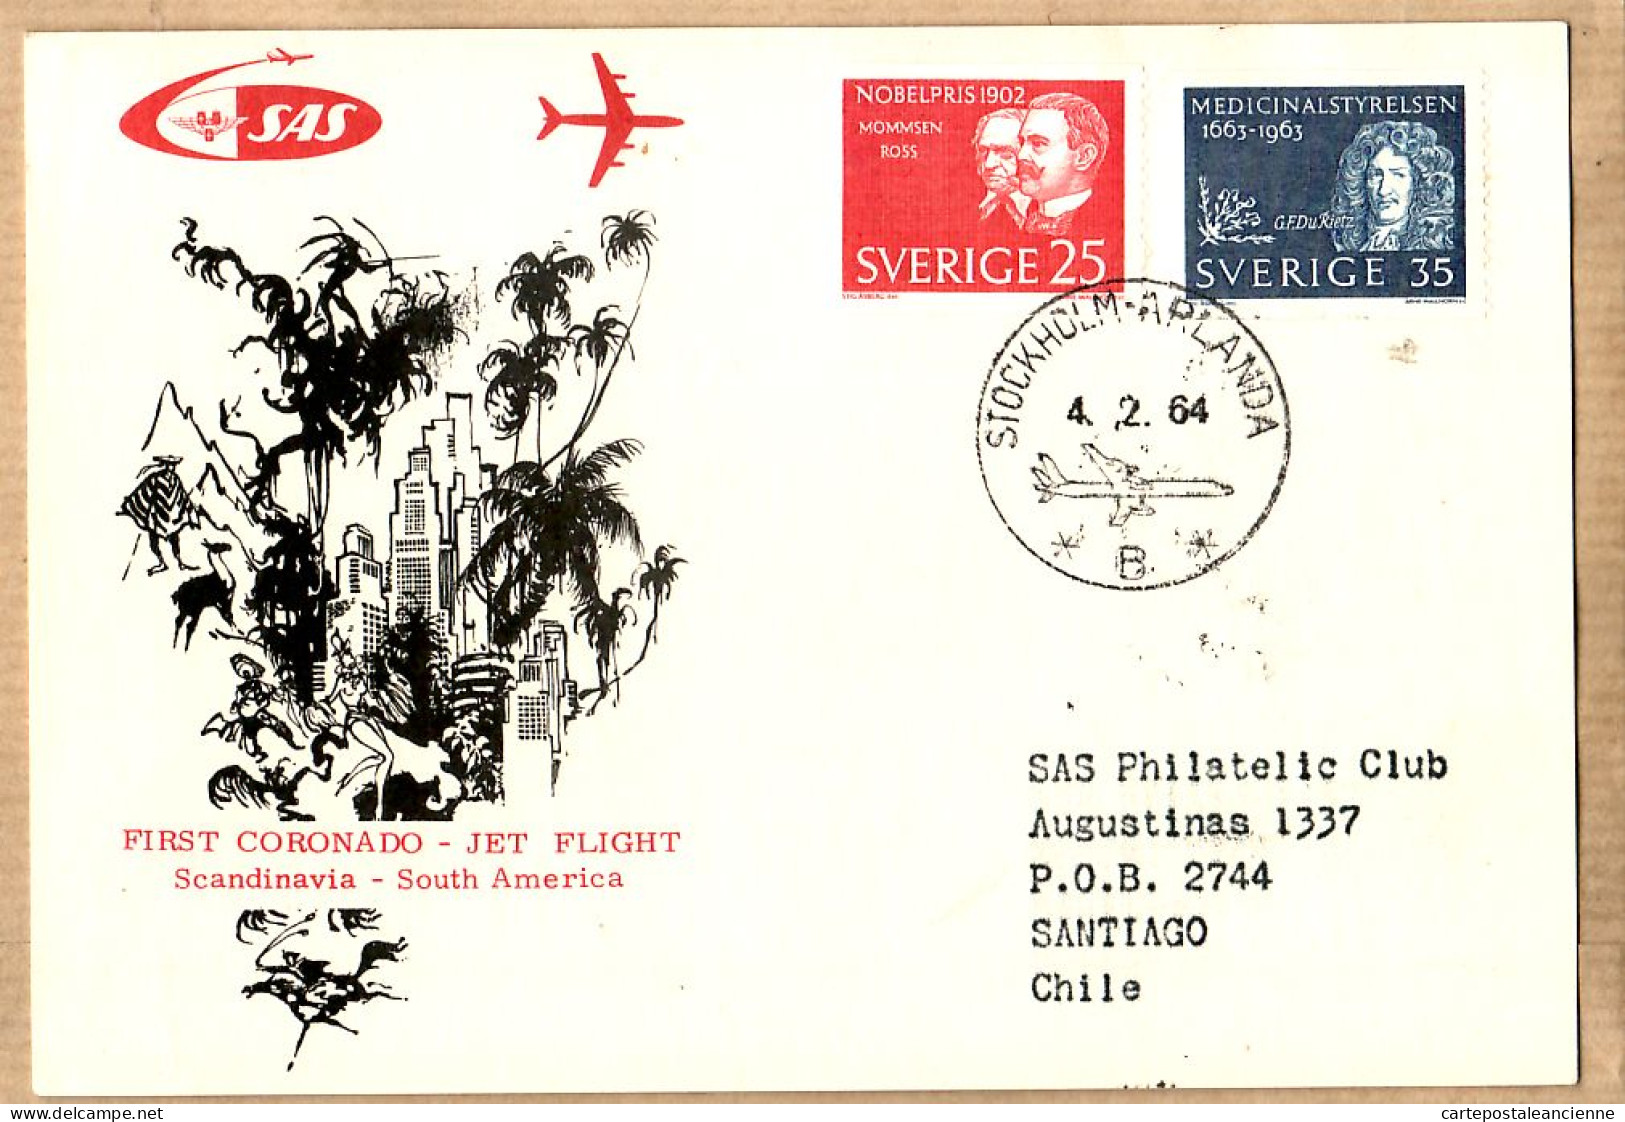 04532 / Sweden First SAS CORONADO Jet Flight Scandinavia SOUTH-AMERICA 04-02-1964 STOCKHOLM ARLANDA SANTIAGO CHILE Cpav - Lettres & Documents